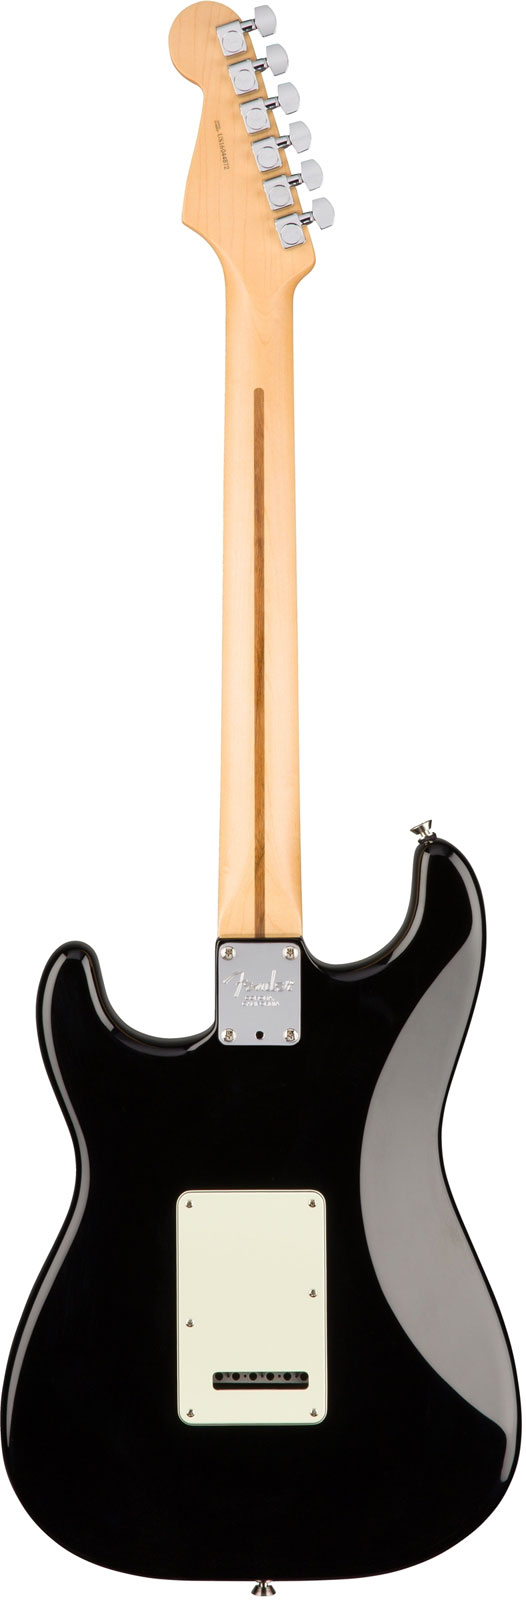 Fender Strat American Professional 2017 3s Usa Mn - Black - Str shape electric guitar - Variation 2